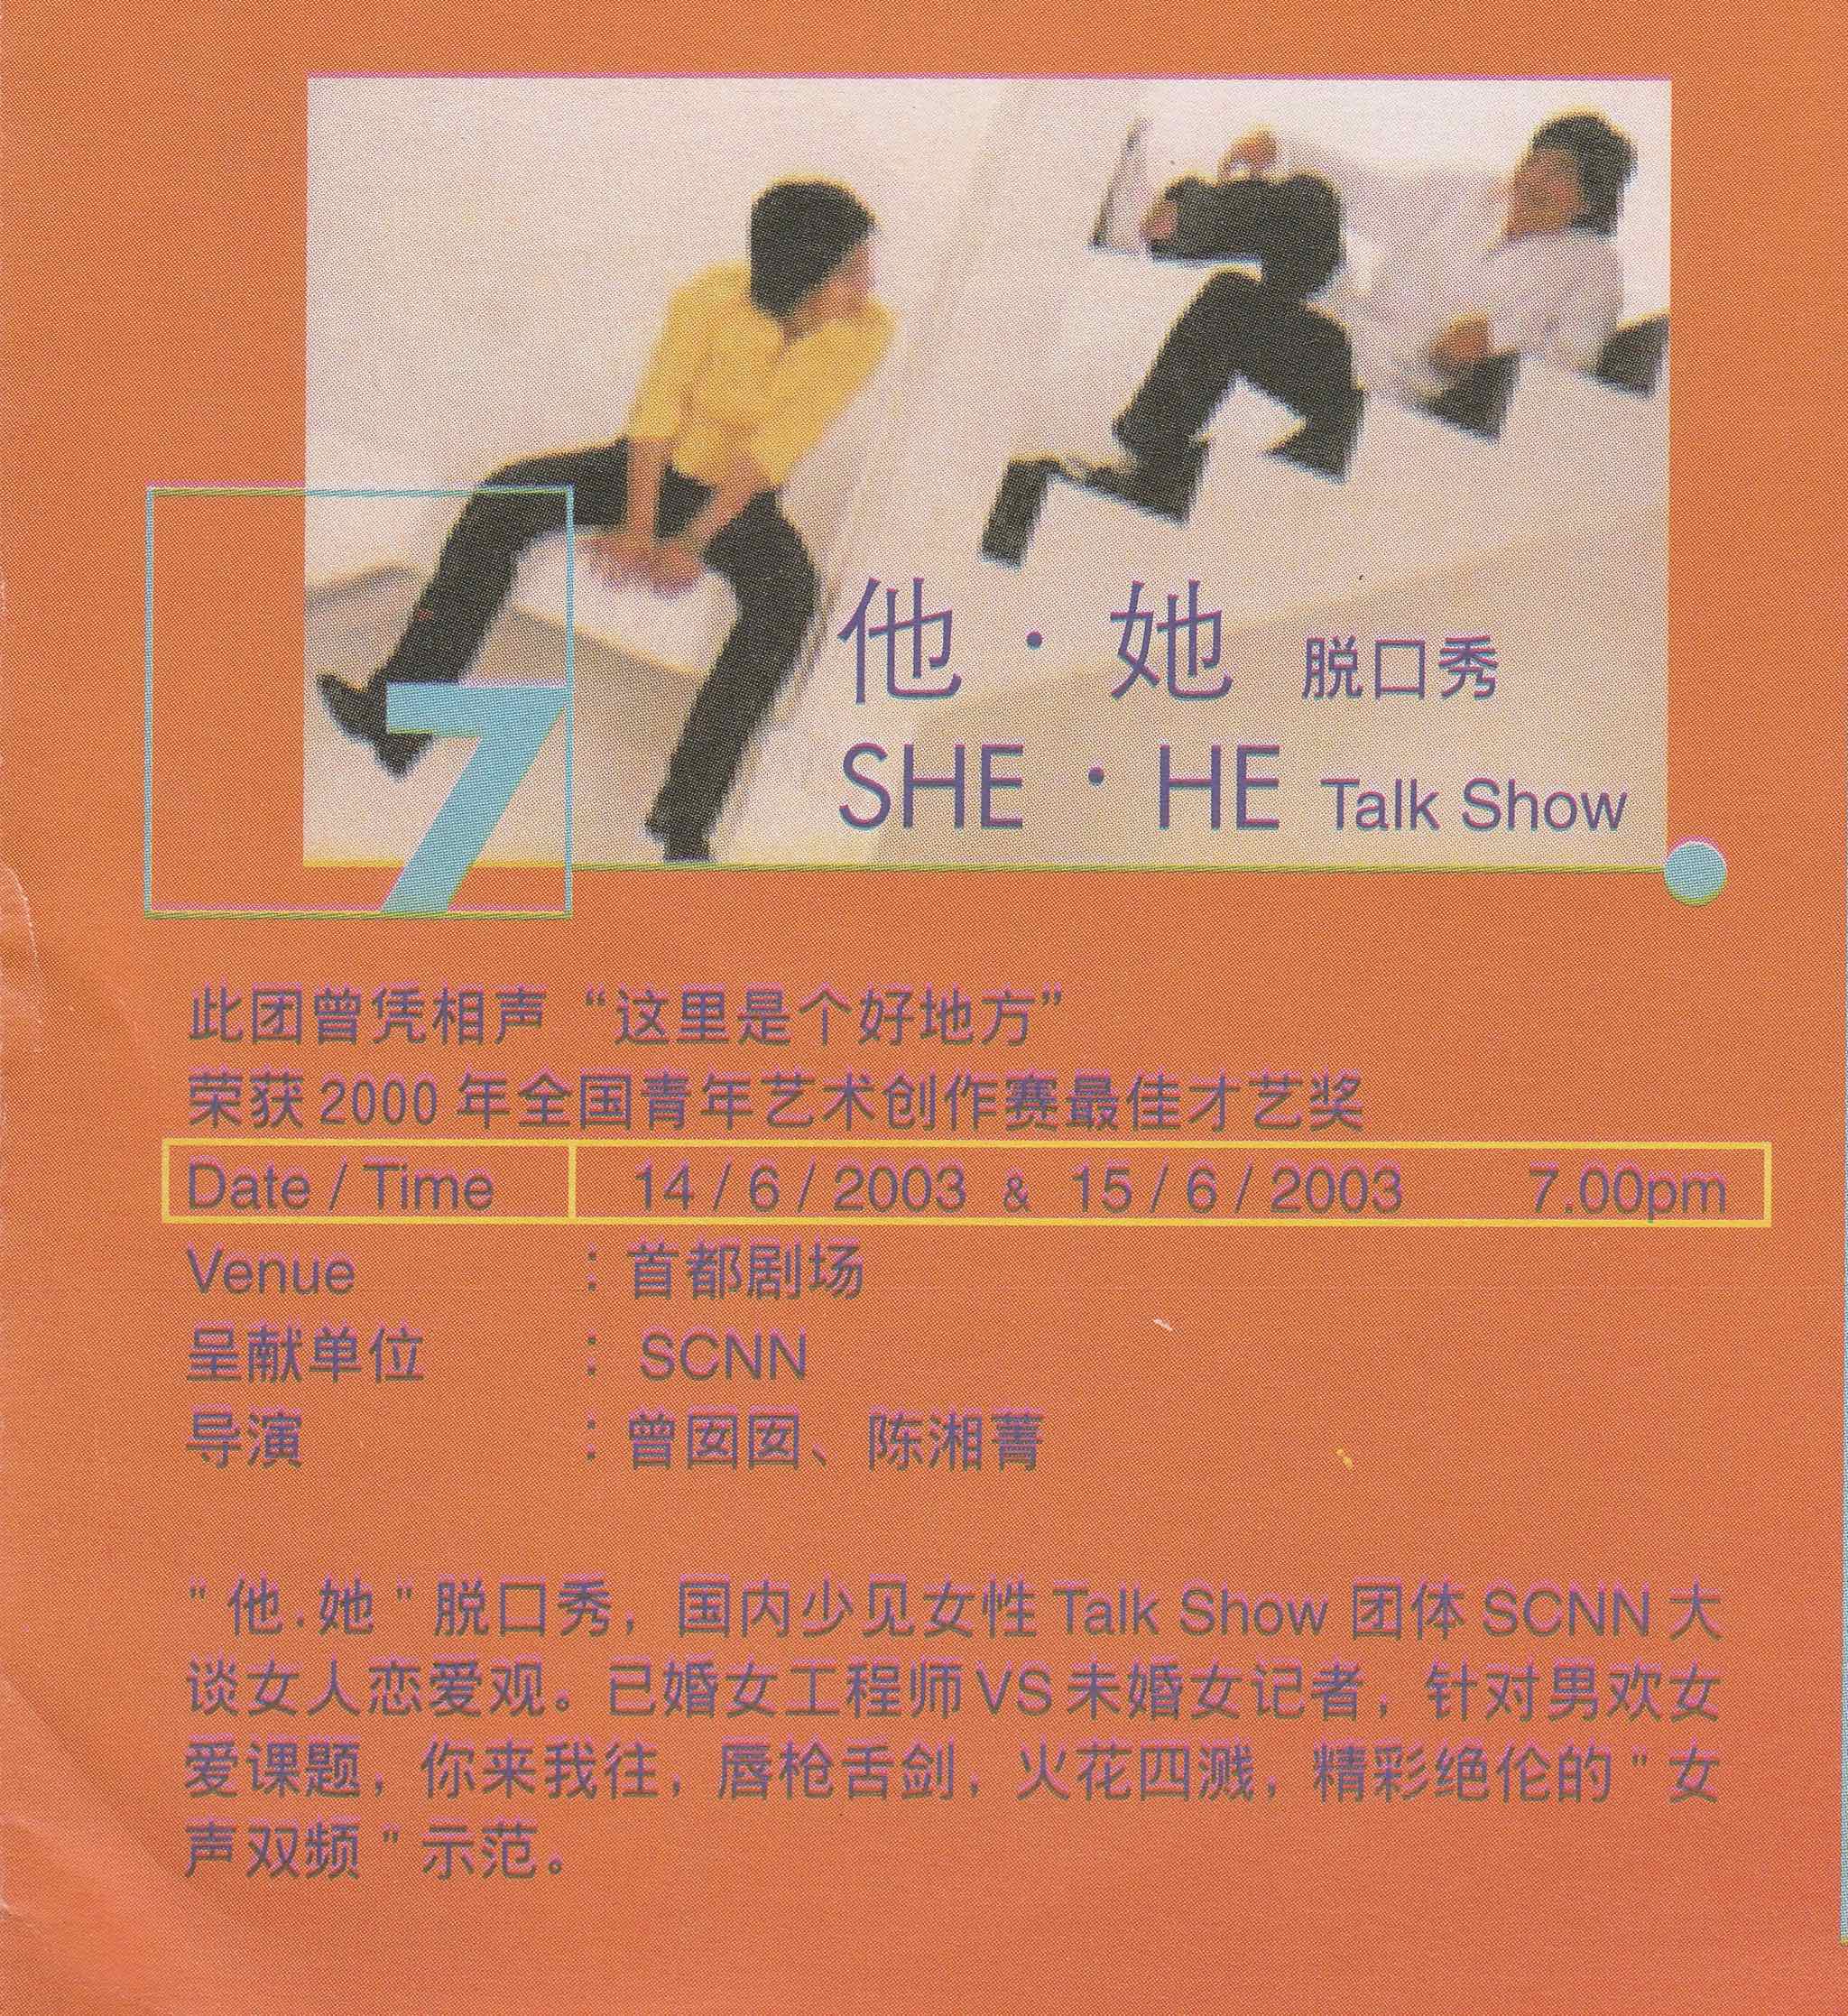 2003 She . He Talk Show Info